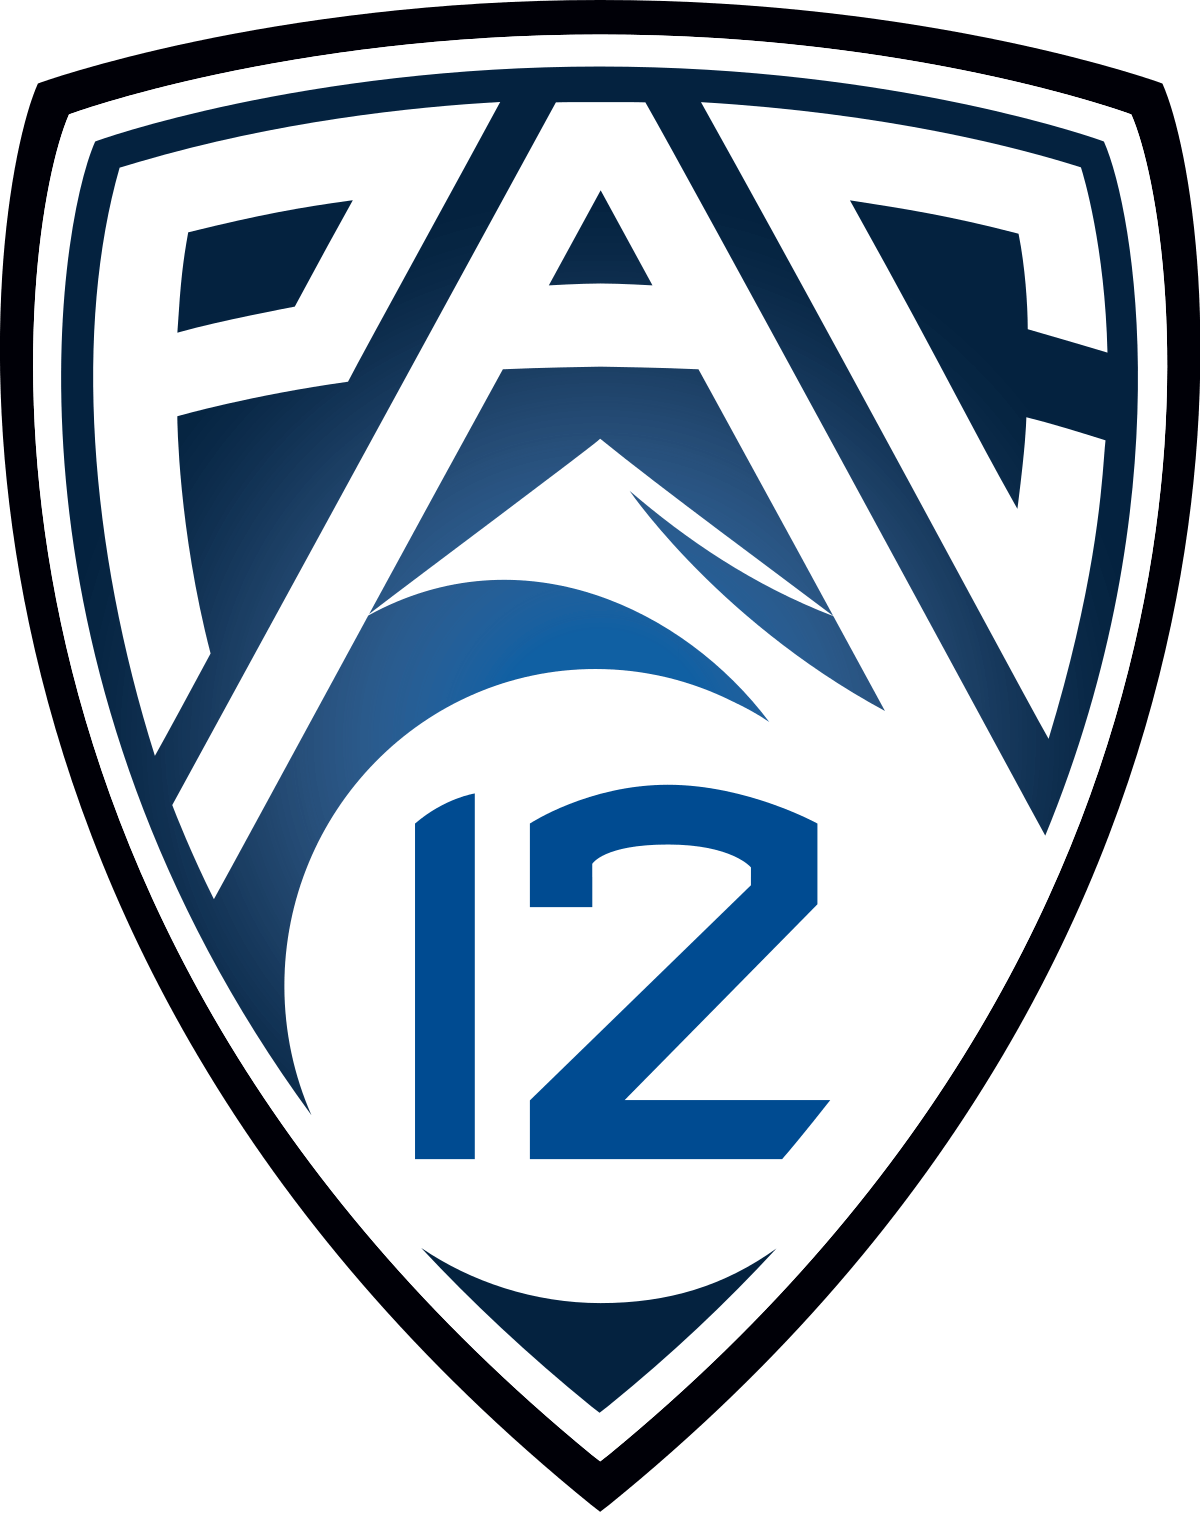 Arizona Football Team Logo - Pac-12 Conference